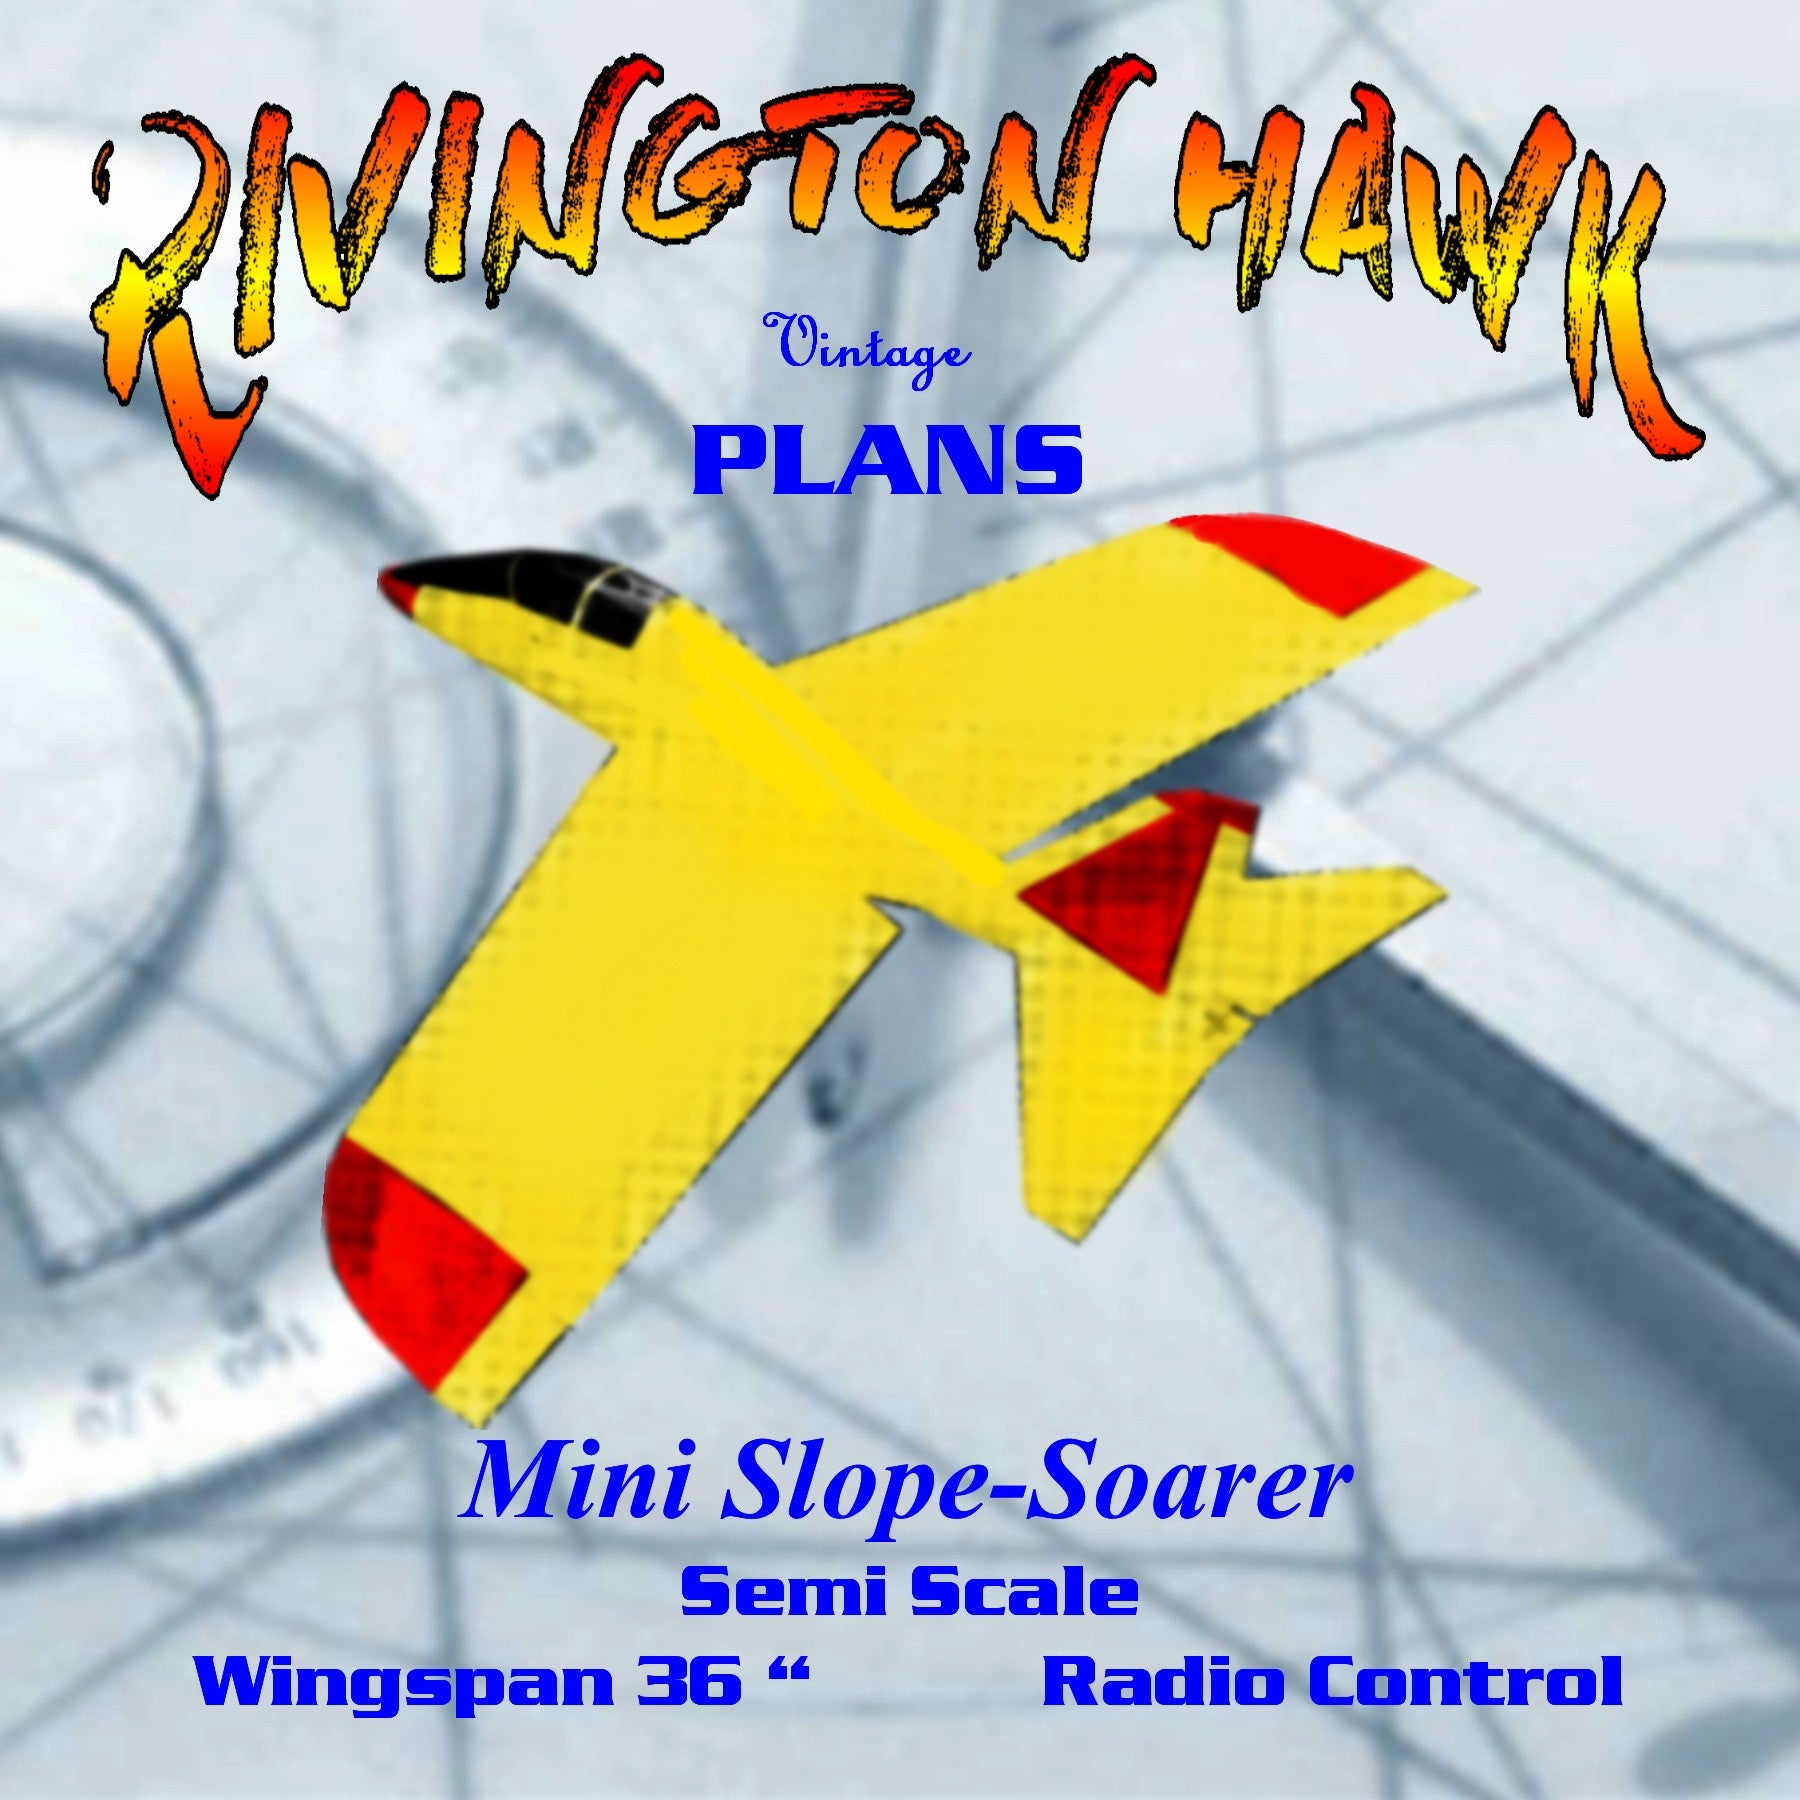 full size printed plans mini slope-soarer semi scale  w/s36 inch  for 2 channel radio control